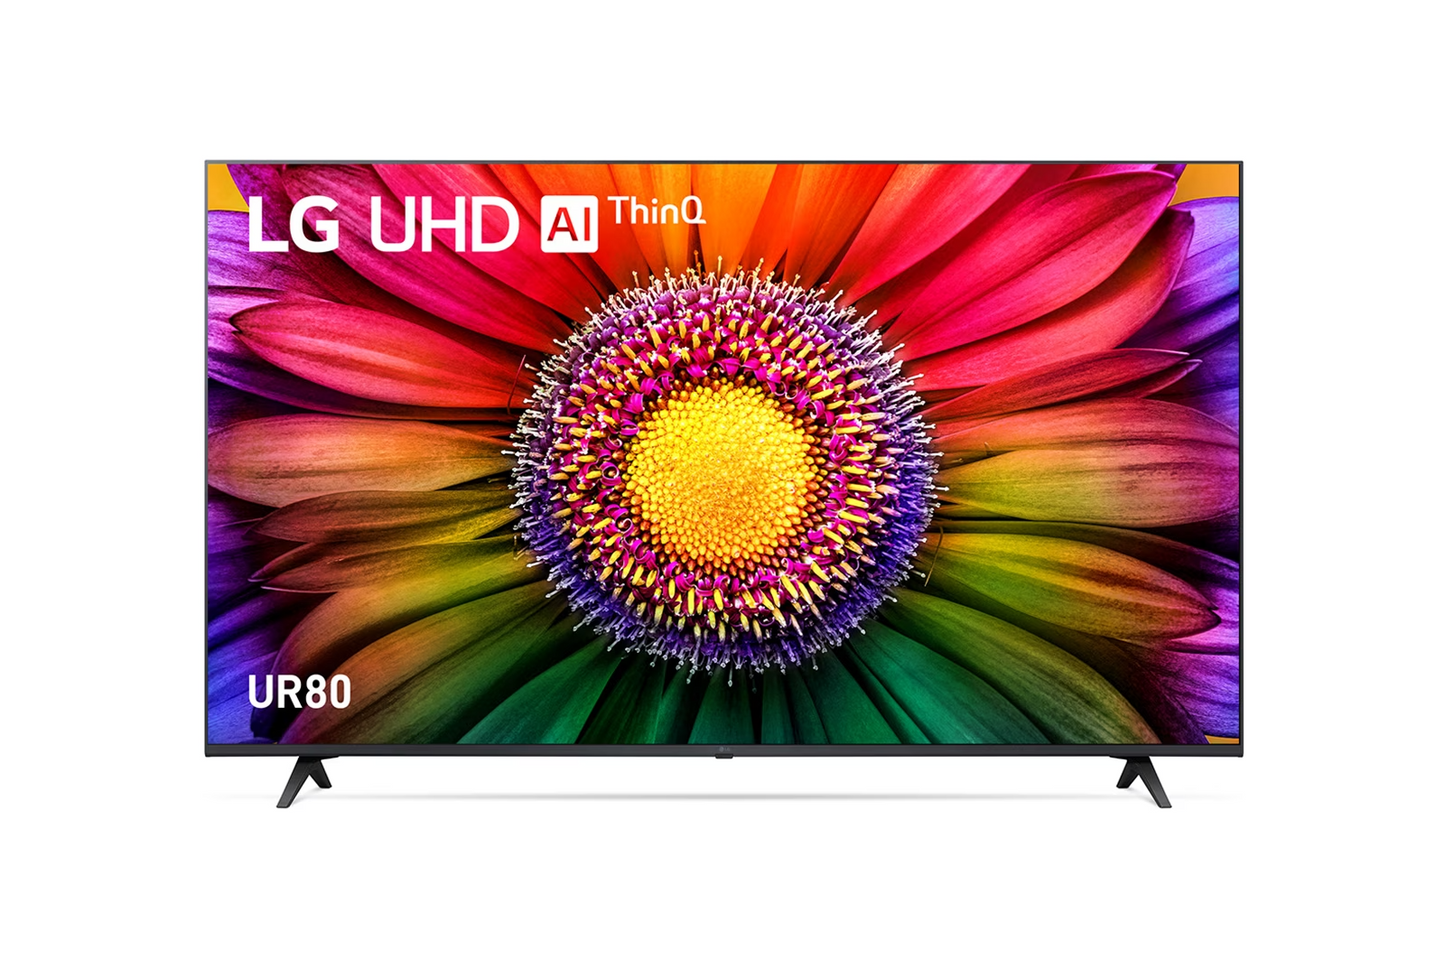 LG UHD TV UR80 65-inch 4K Smart TV with AI Sound Pro